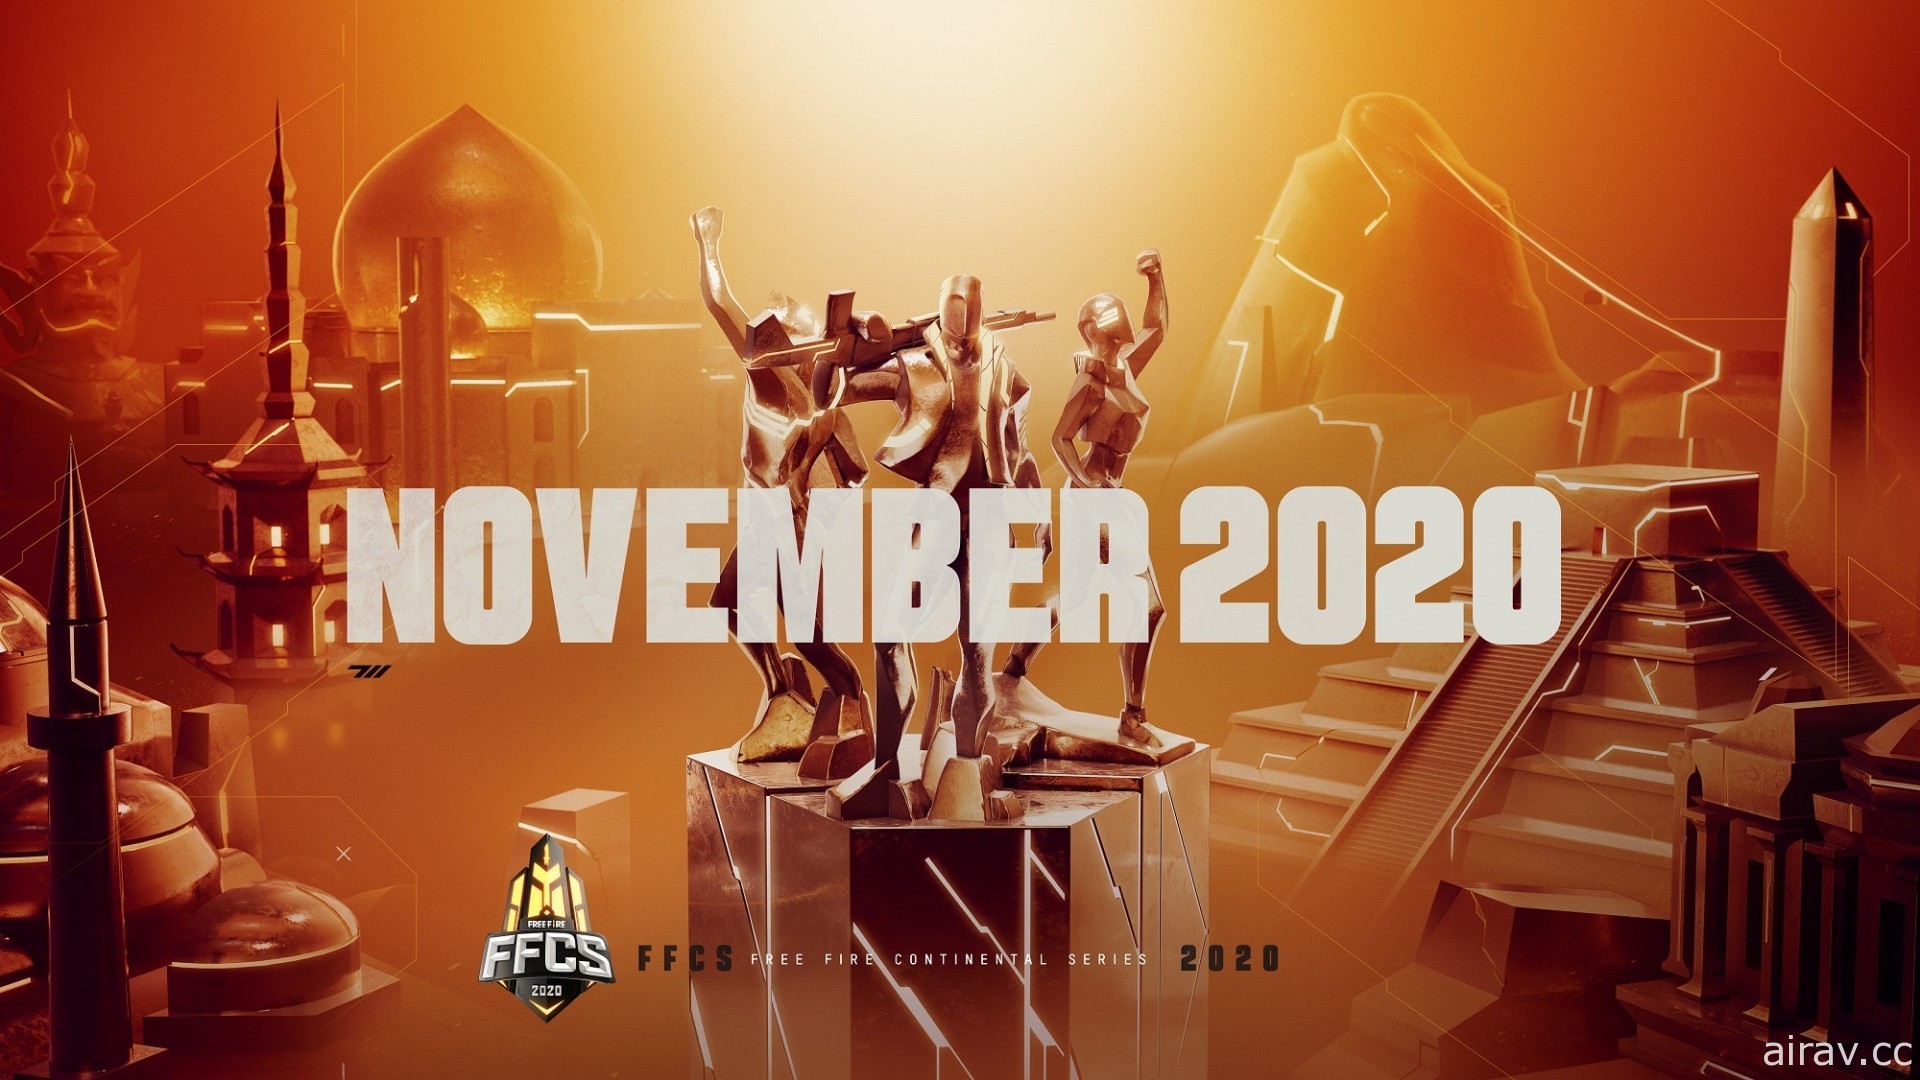 《Free Fire - 我要活下去》 2020 大型國際賽事 FFCS 賽程內容公開